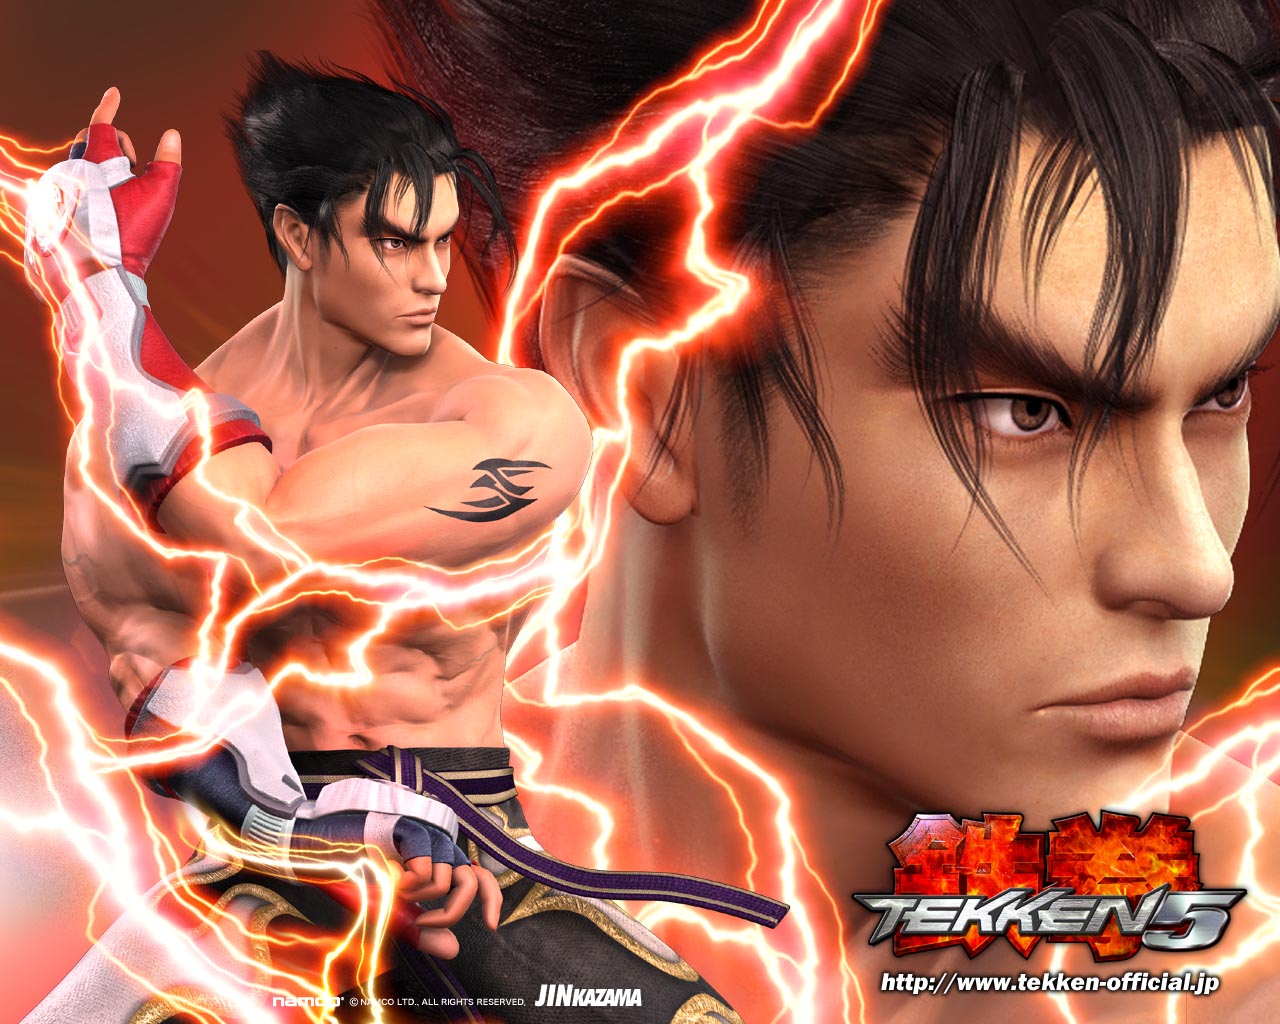 HD Wallpaper All Characters Of Tekken Game